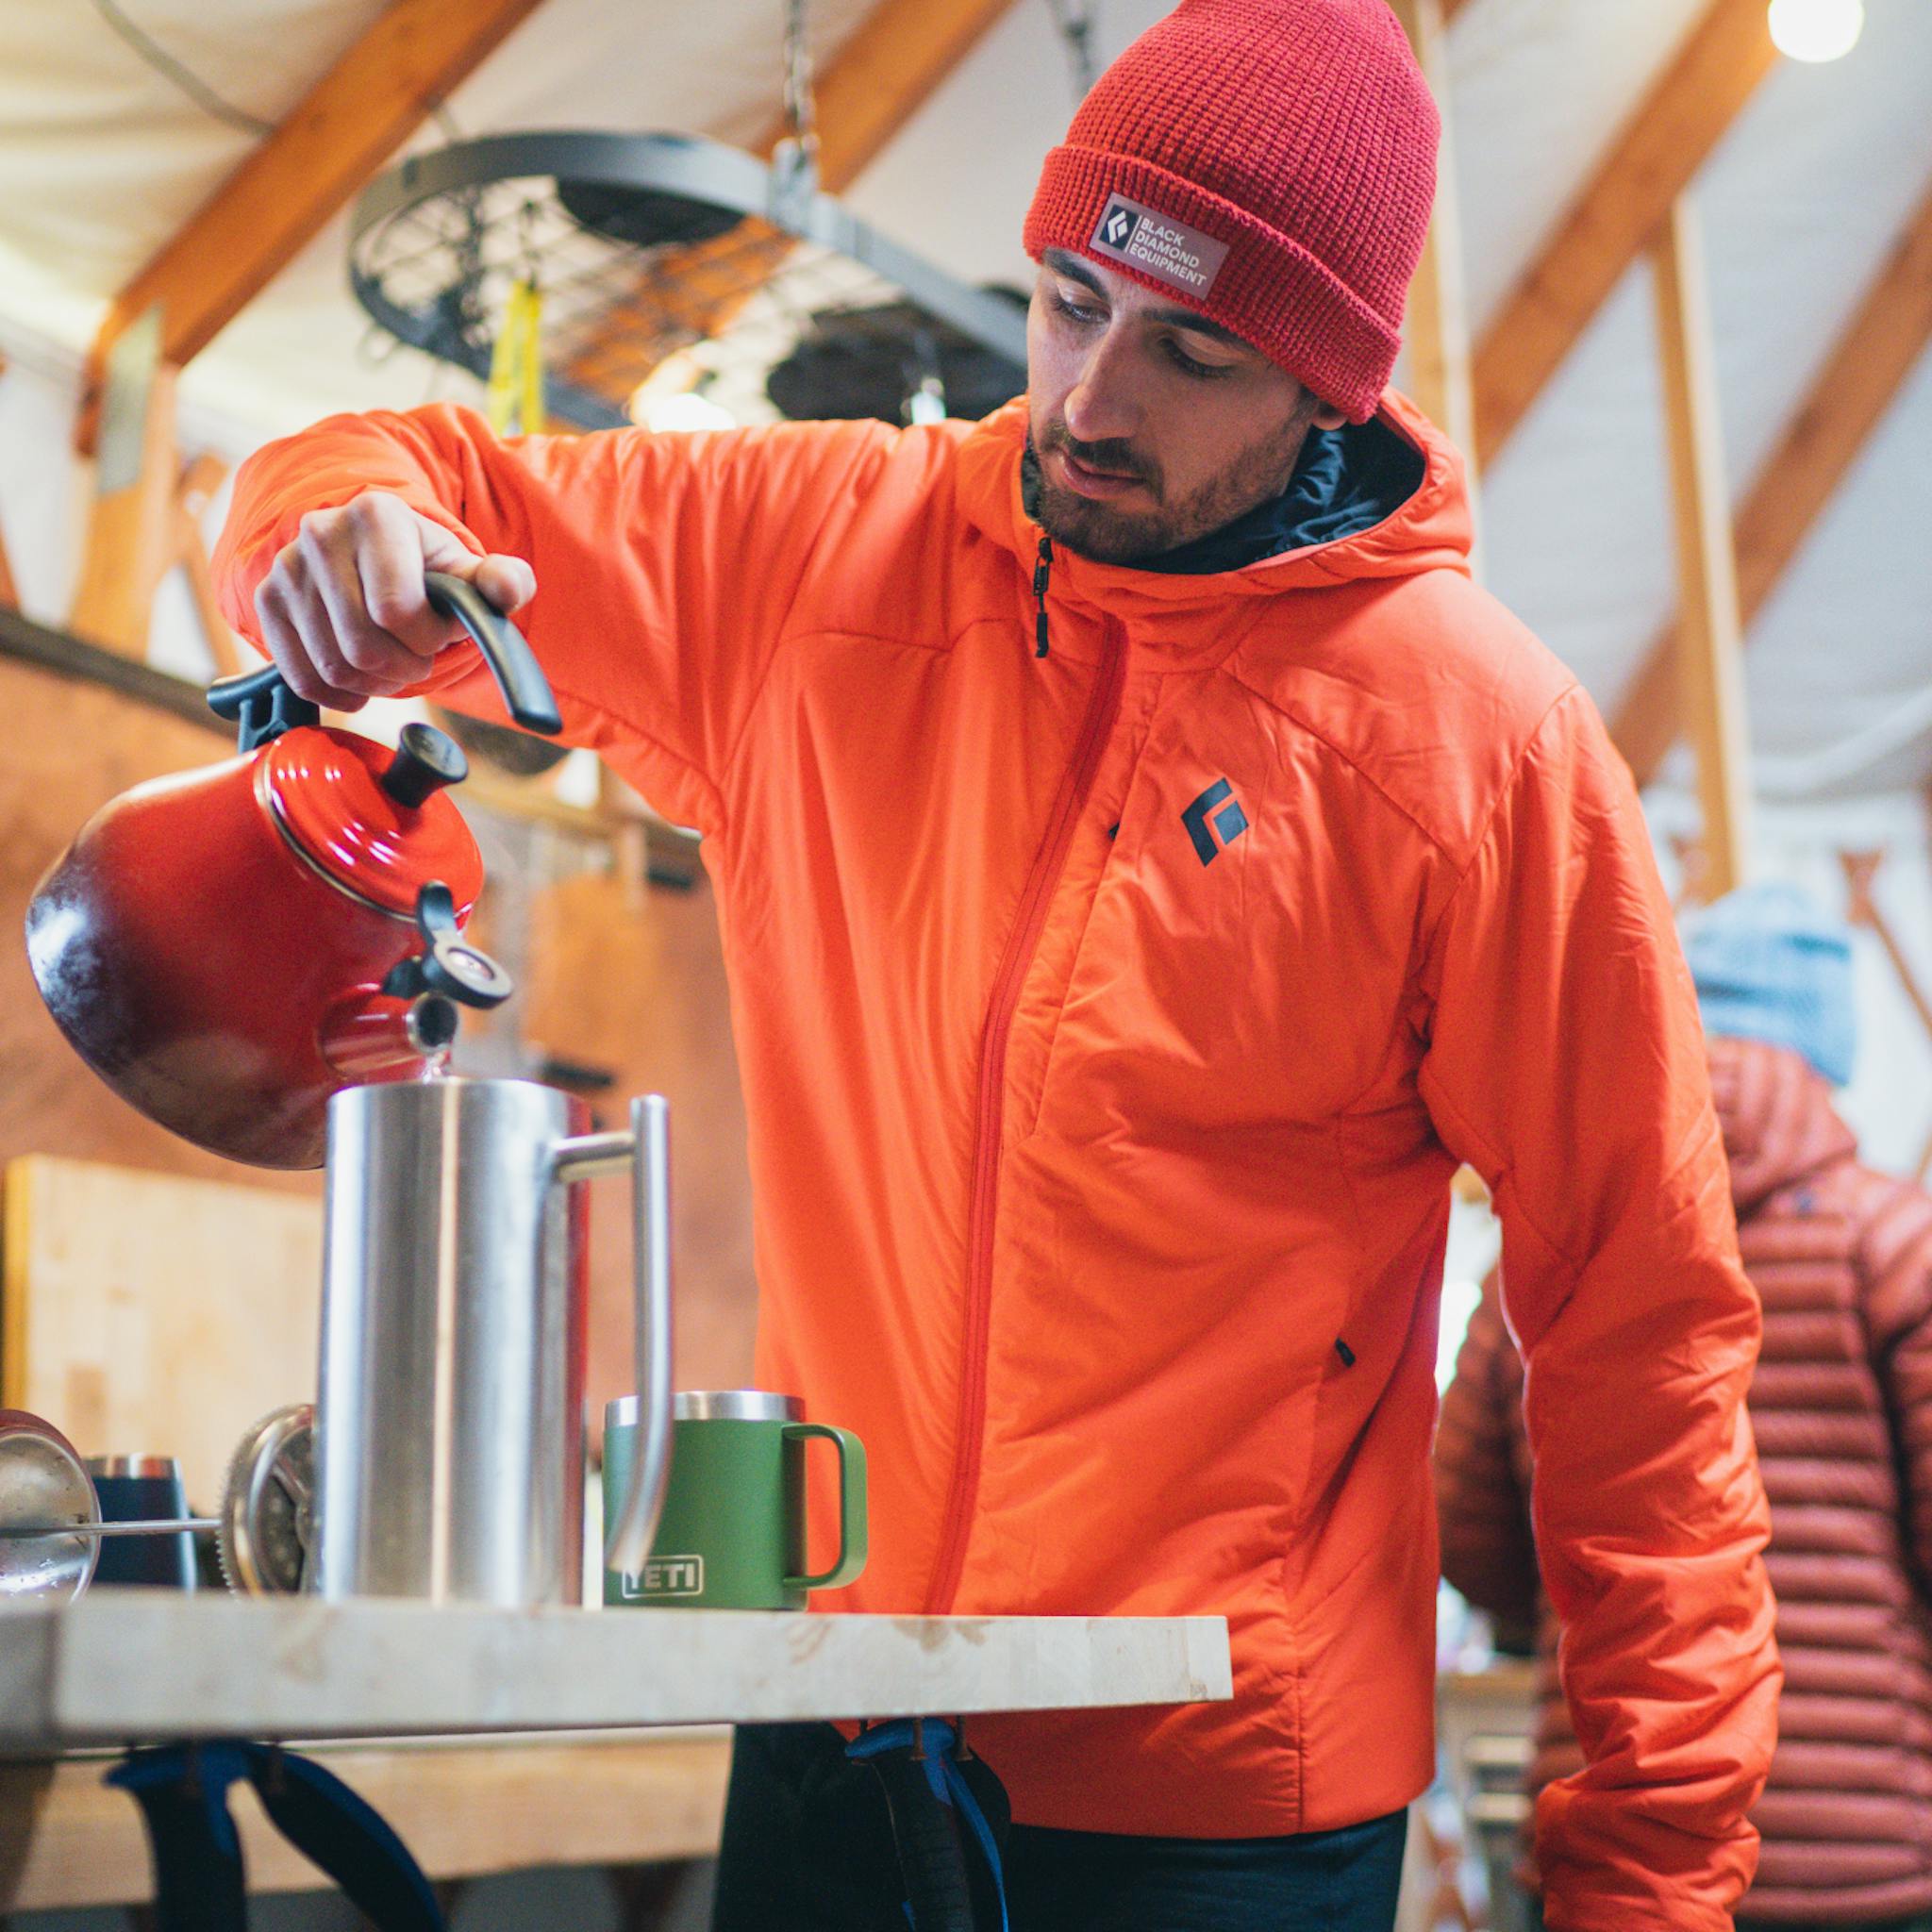 A backcountry skier making coffee before a dawn patrol.